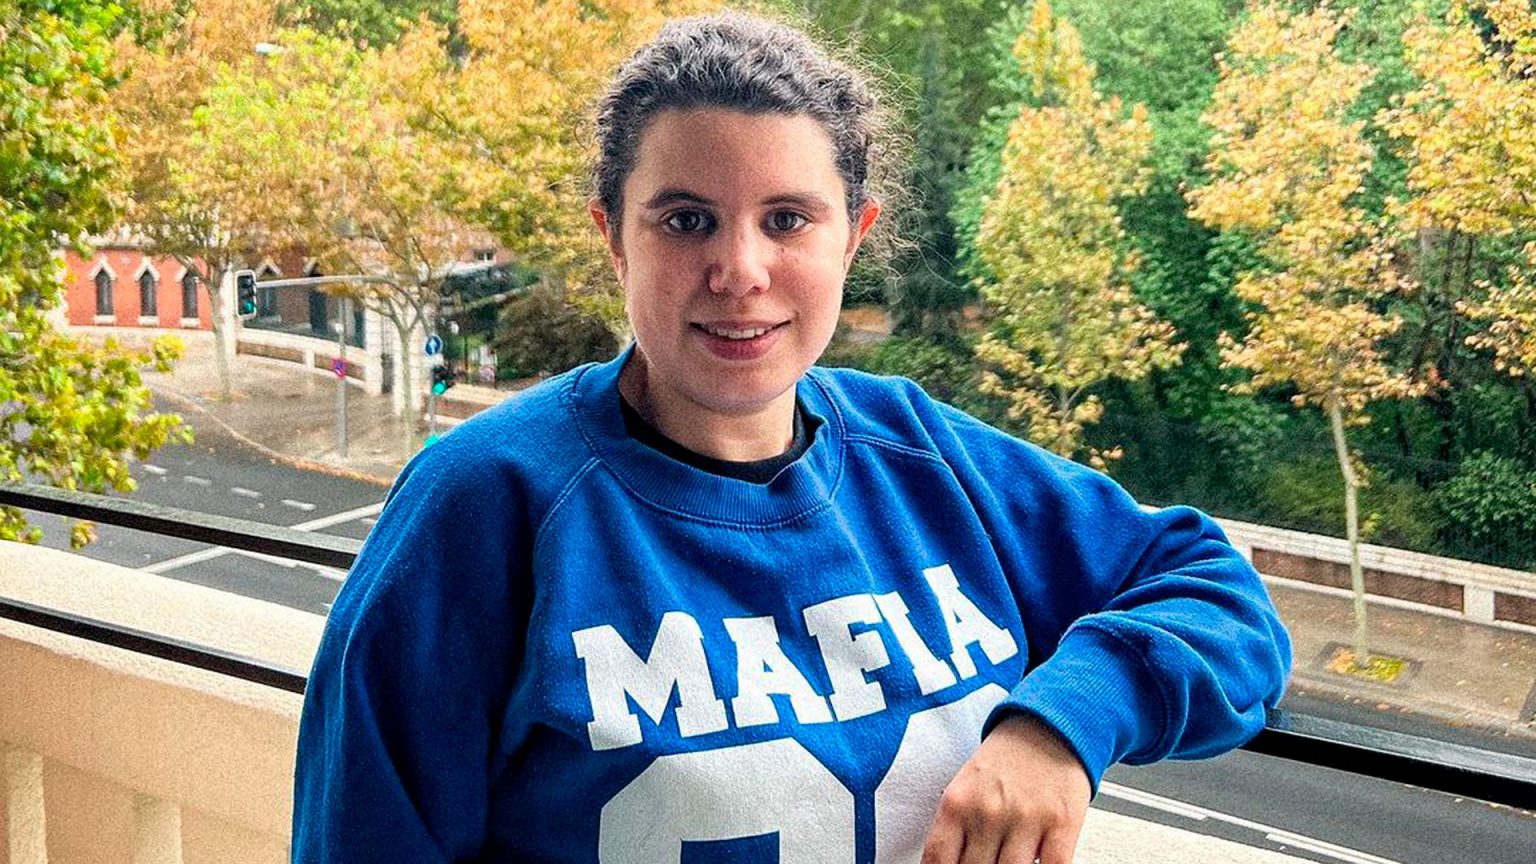 Carla Vigo, ingresada en un hospital por bulimia: "Me mandaron al psiquiatra"